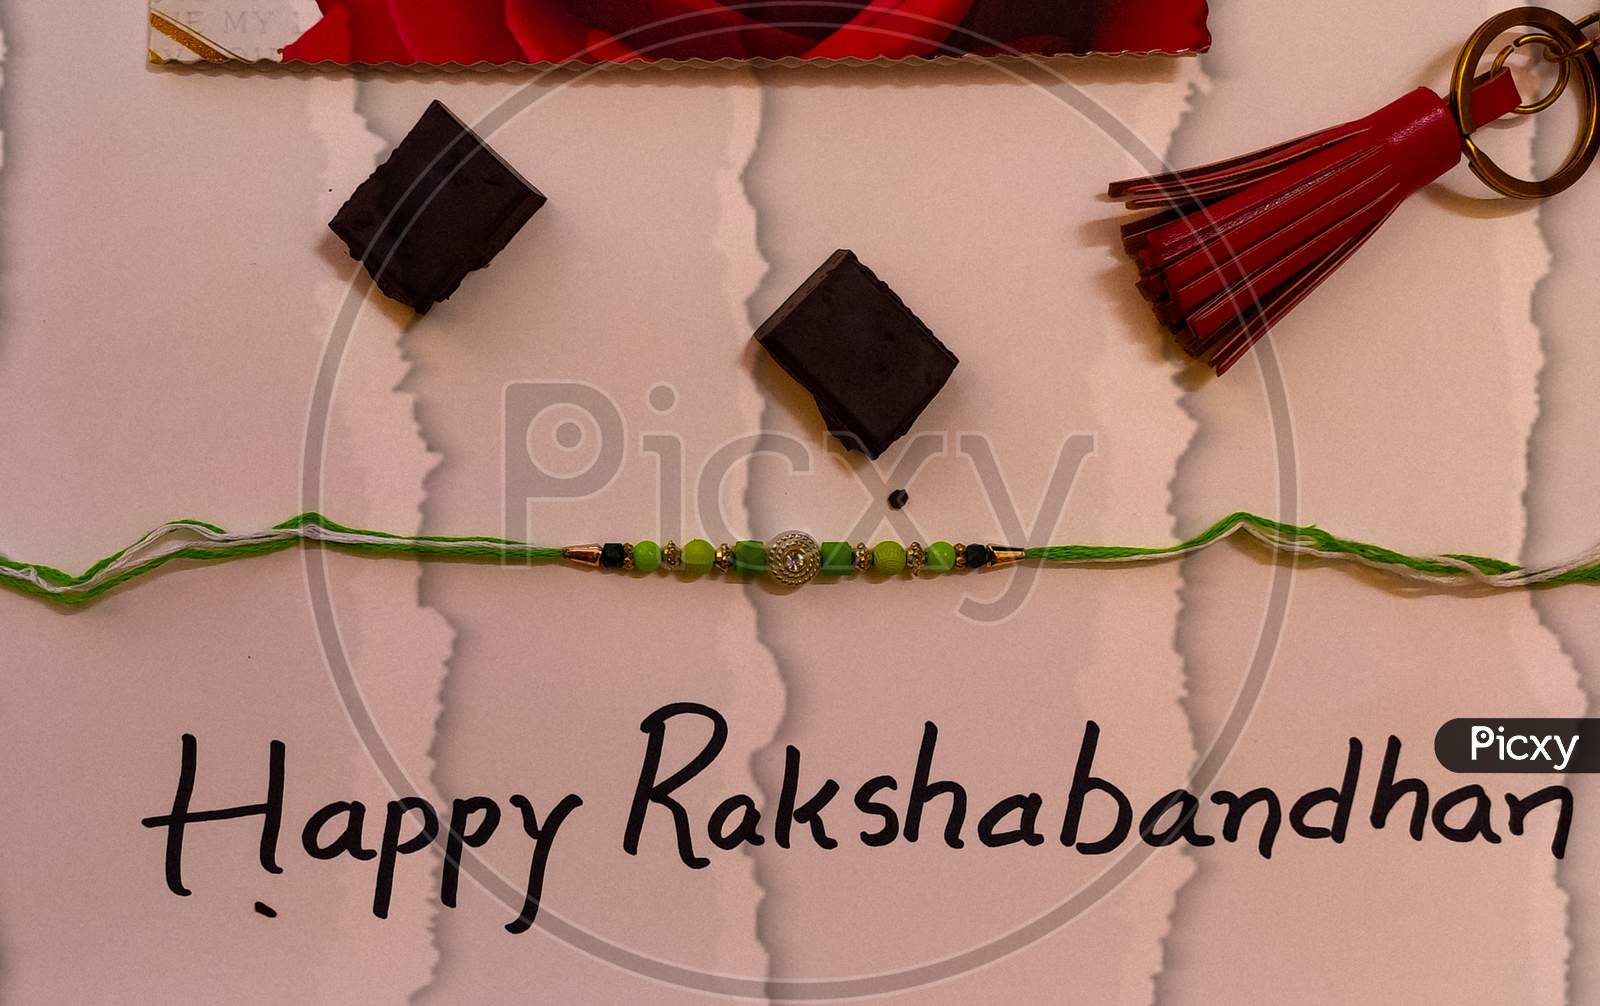 Rakshabandhan a beautiful festival of brother and sister